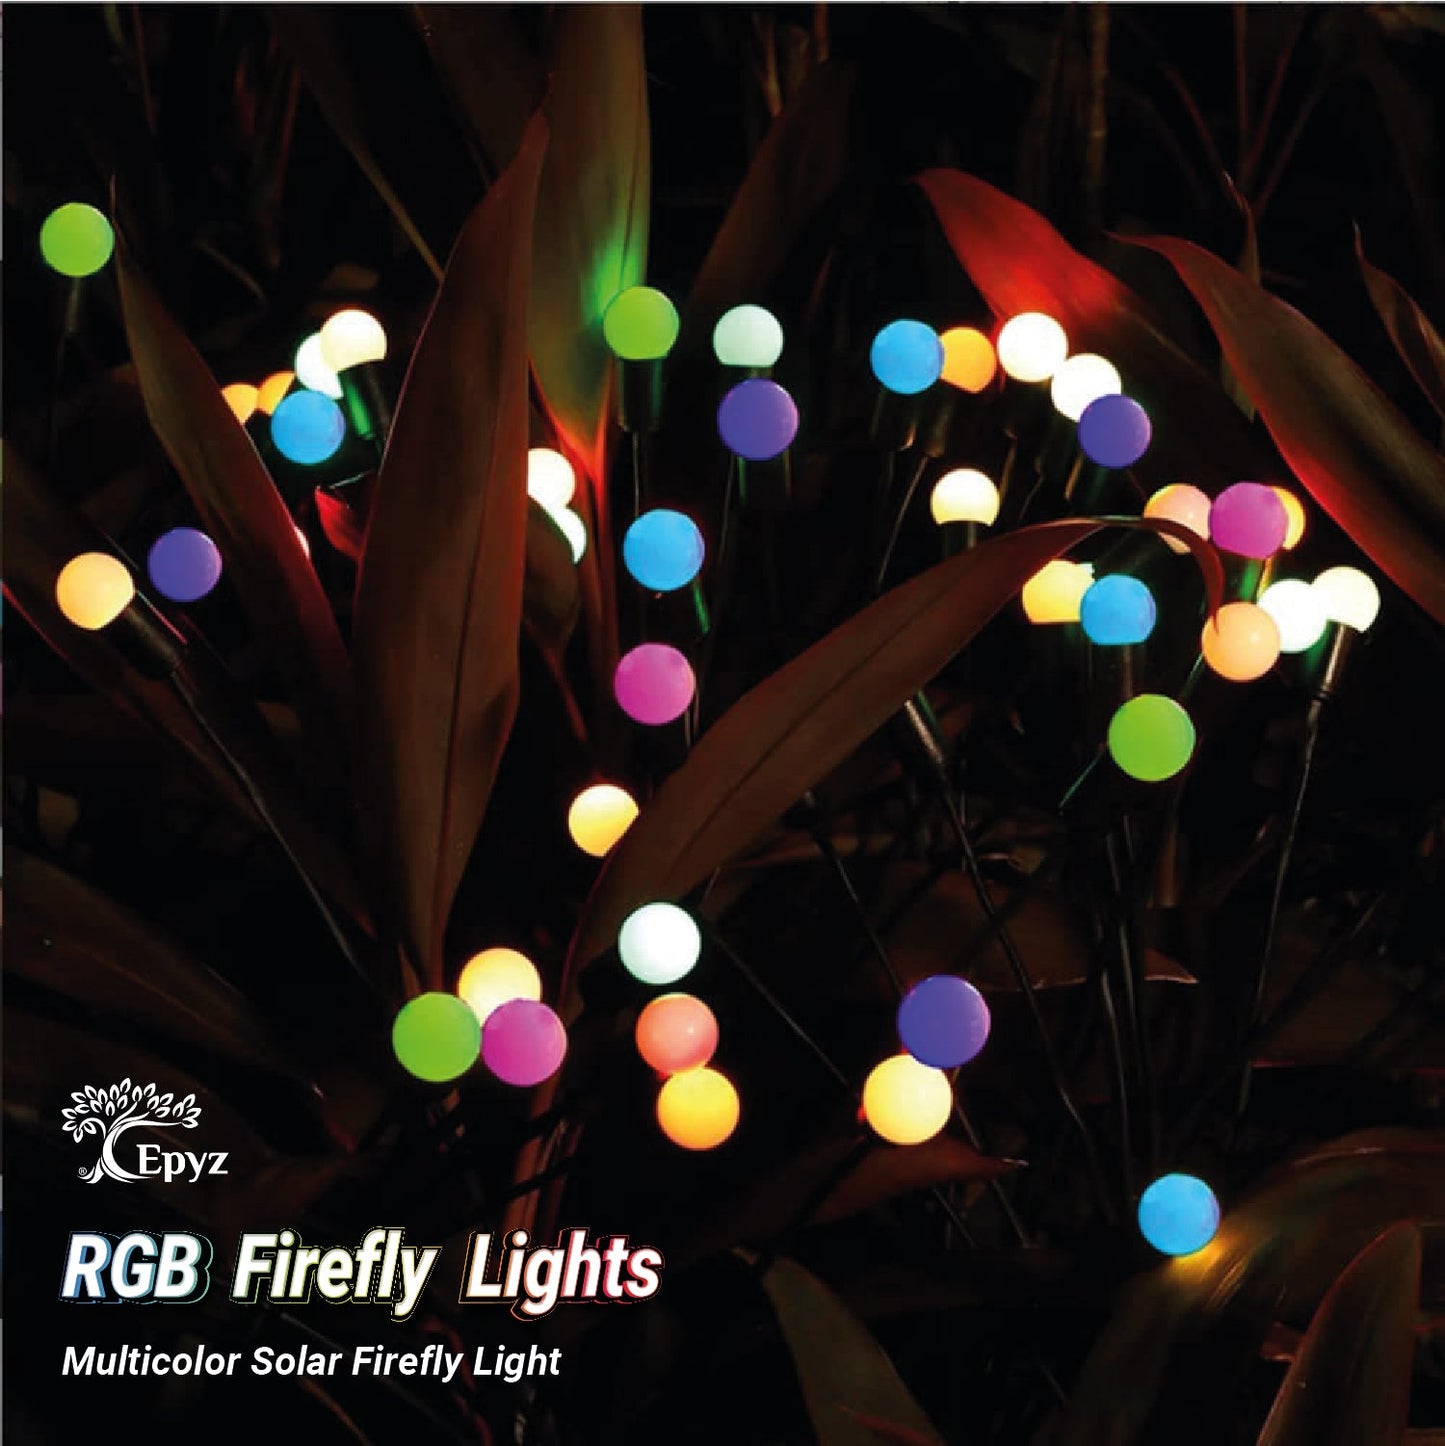 10 LED Solar Firefly Multicolor Lights3